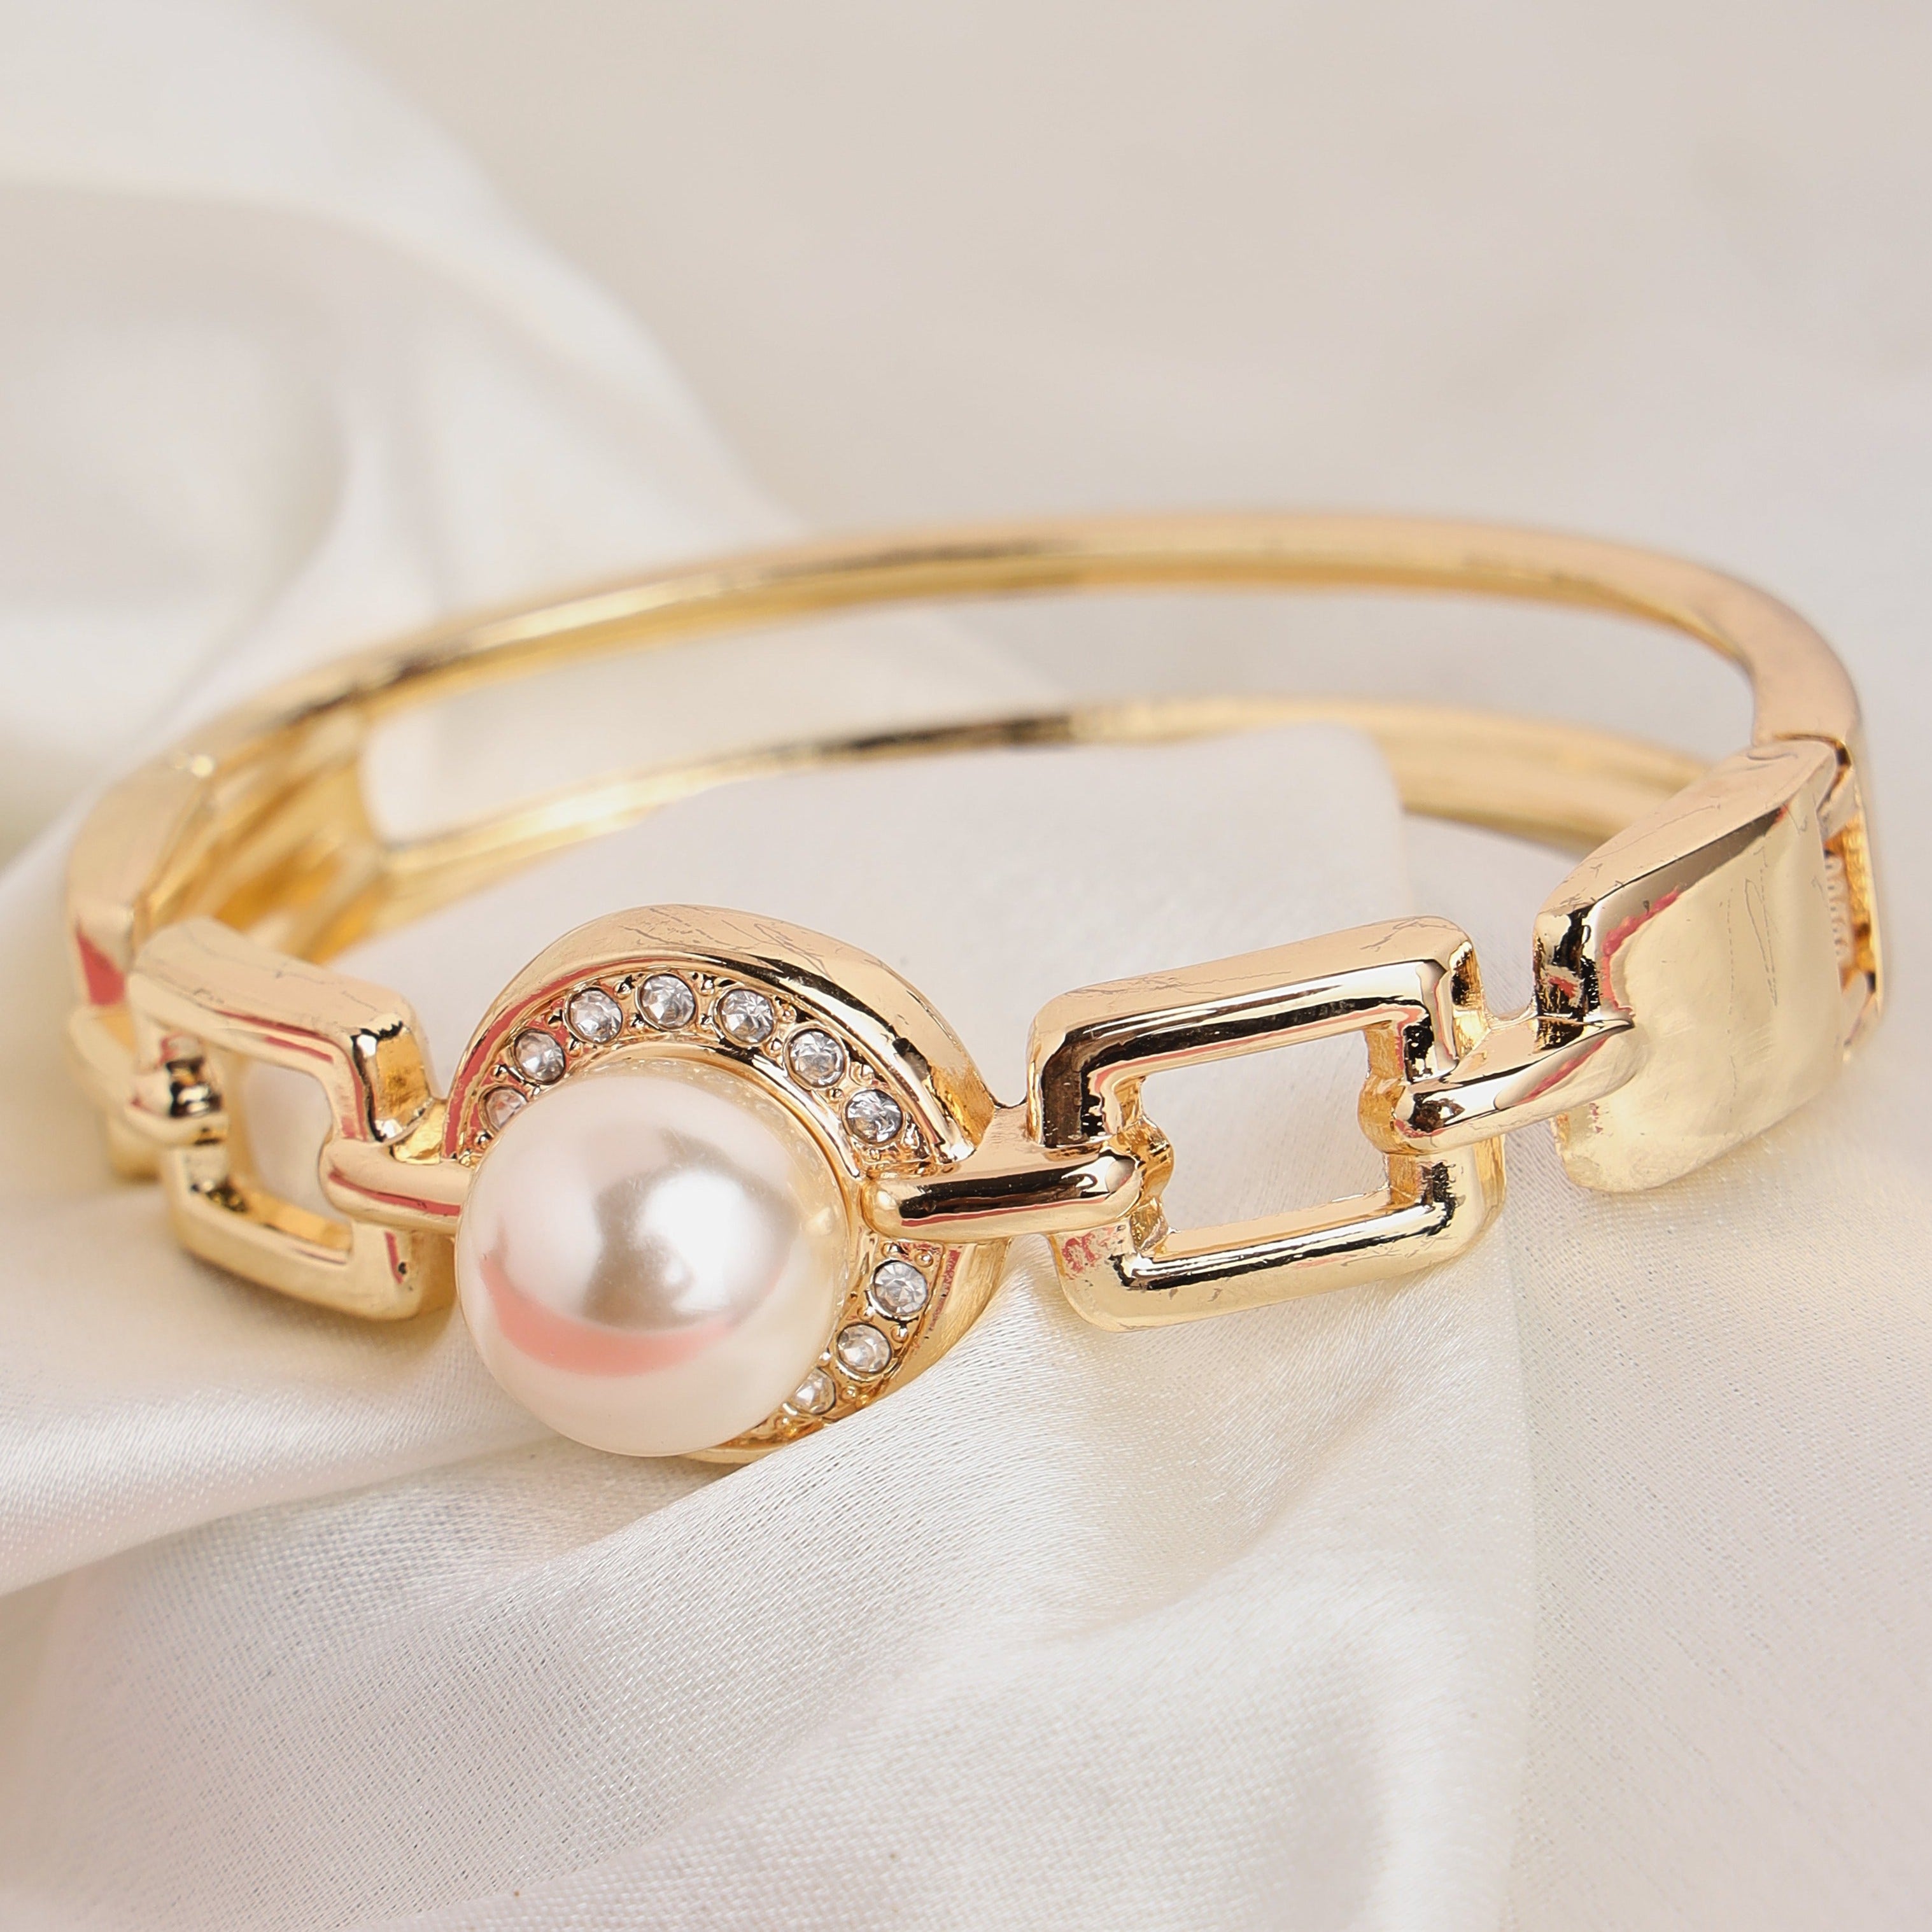 Vintage Pearl and Diamond 14K Gold Bangle Bracelet | eBay